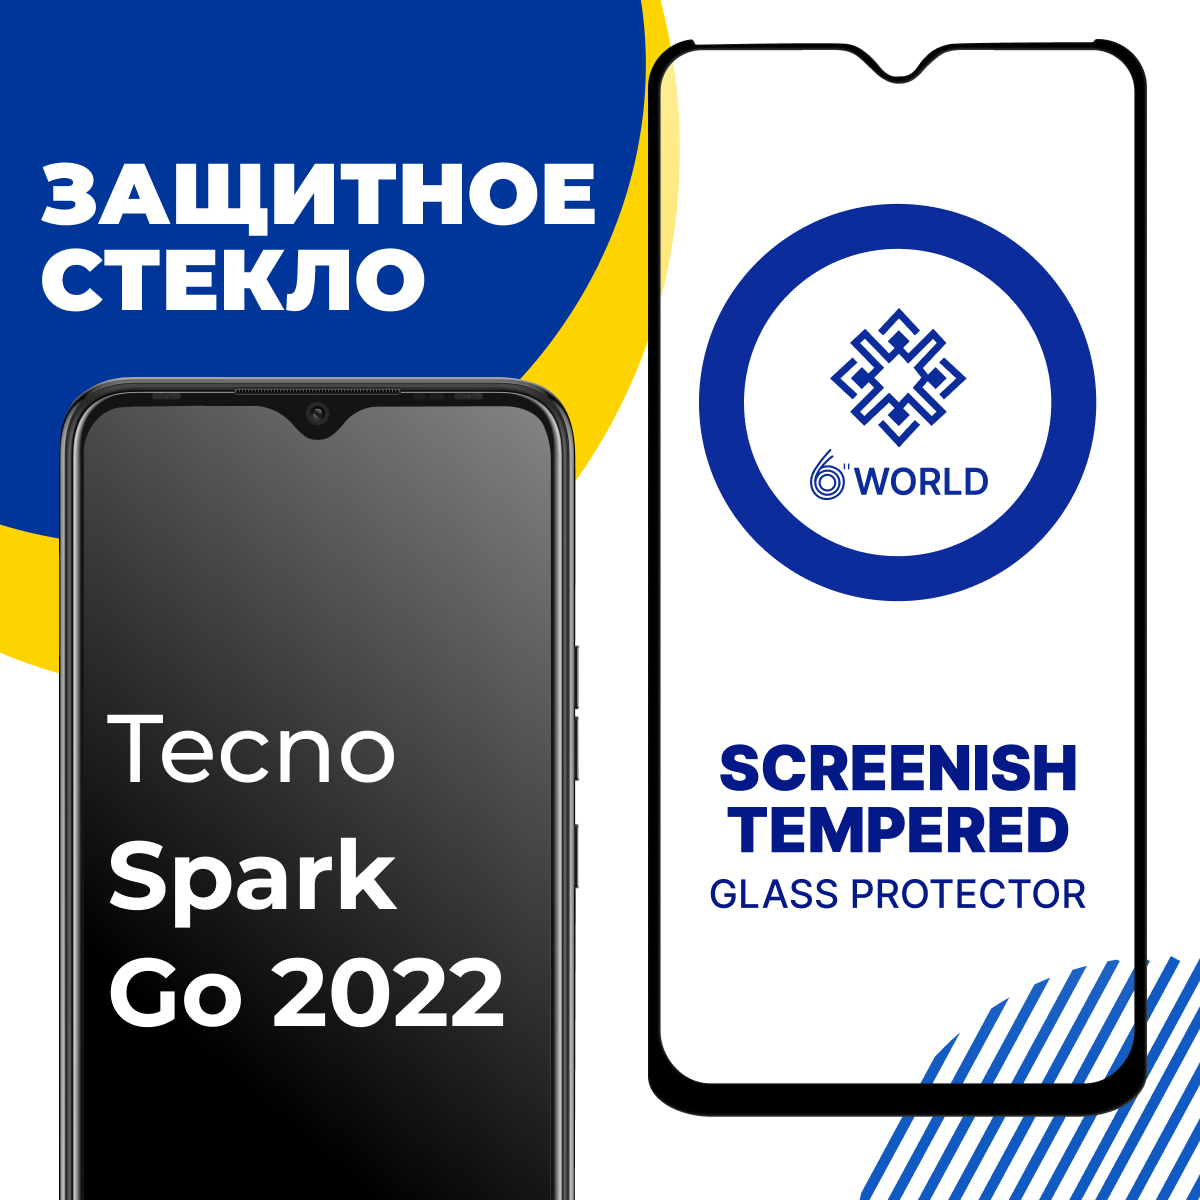 Глянцевое защитное стекло для телефона Tecno Spark Go 2022 / Противоударное закаленное стекло на смартфон Текно Спарк Го 2022 / SCREENISH GLASS